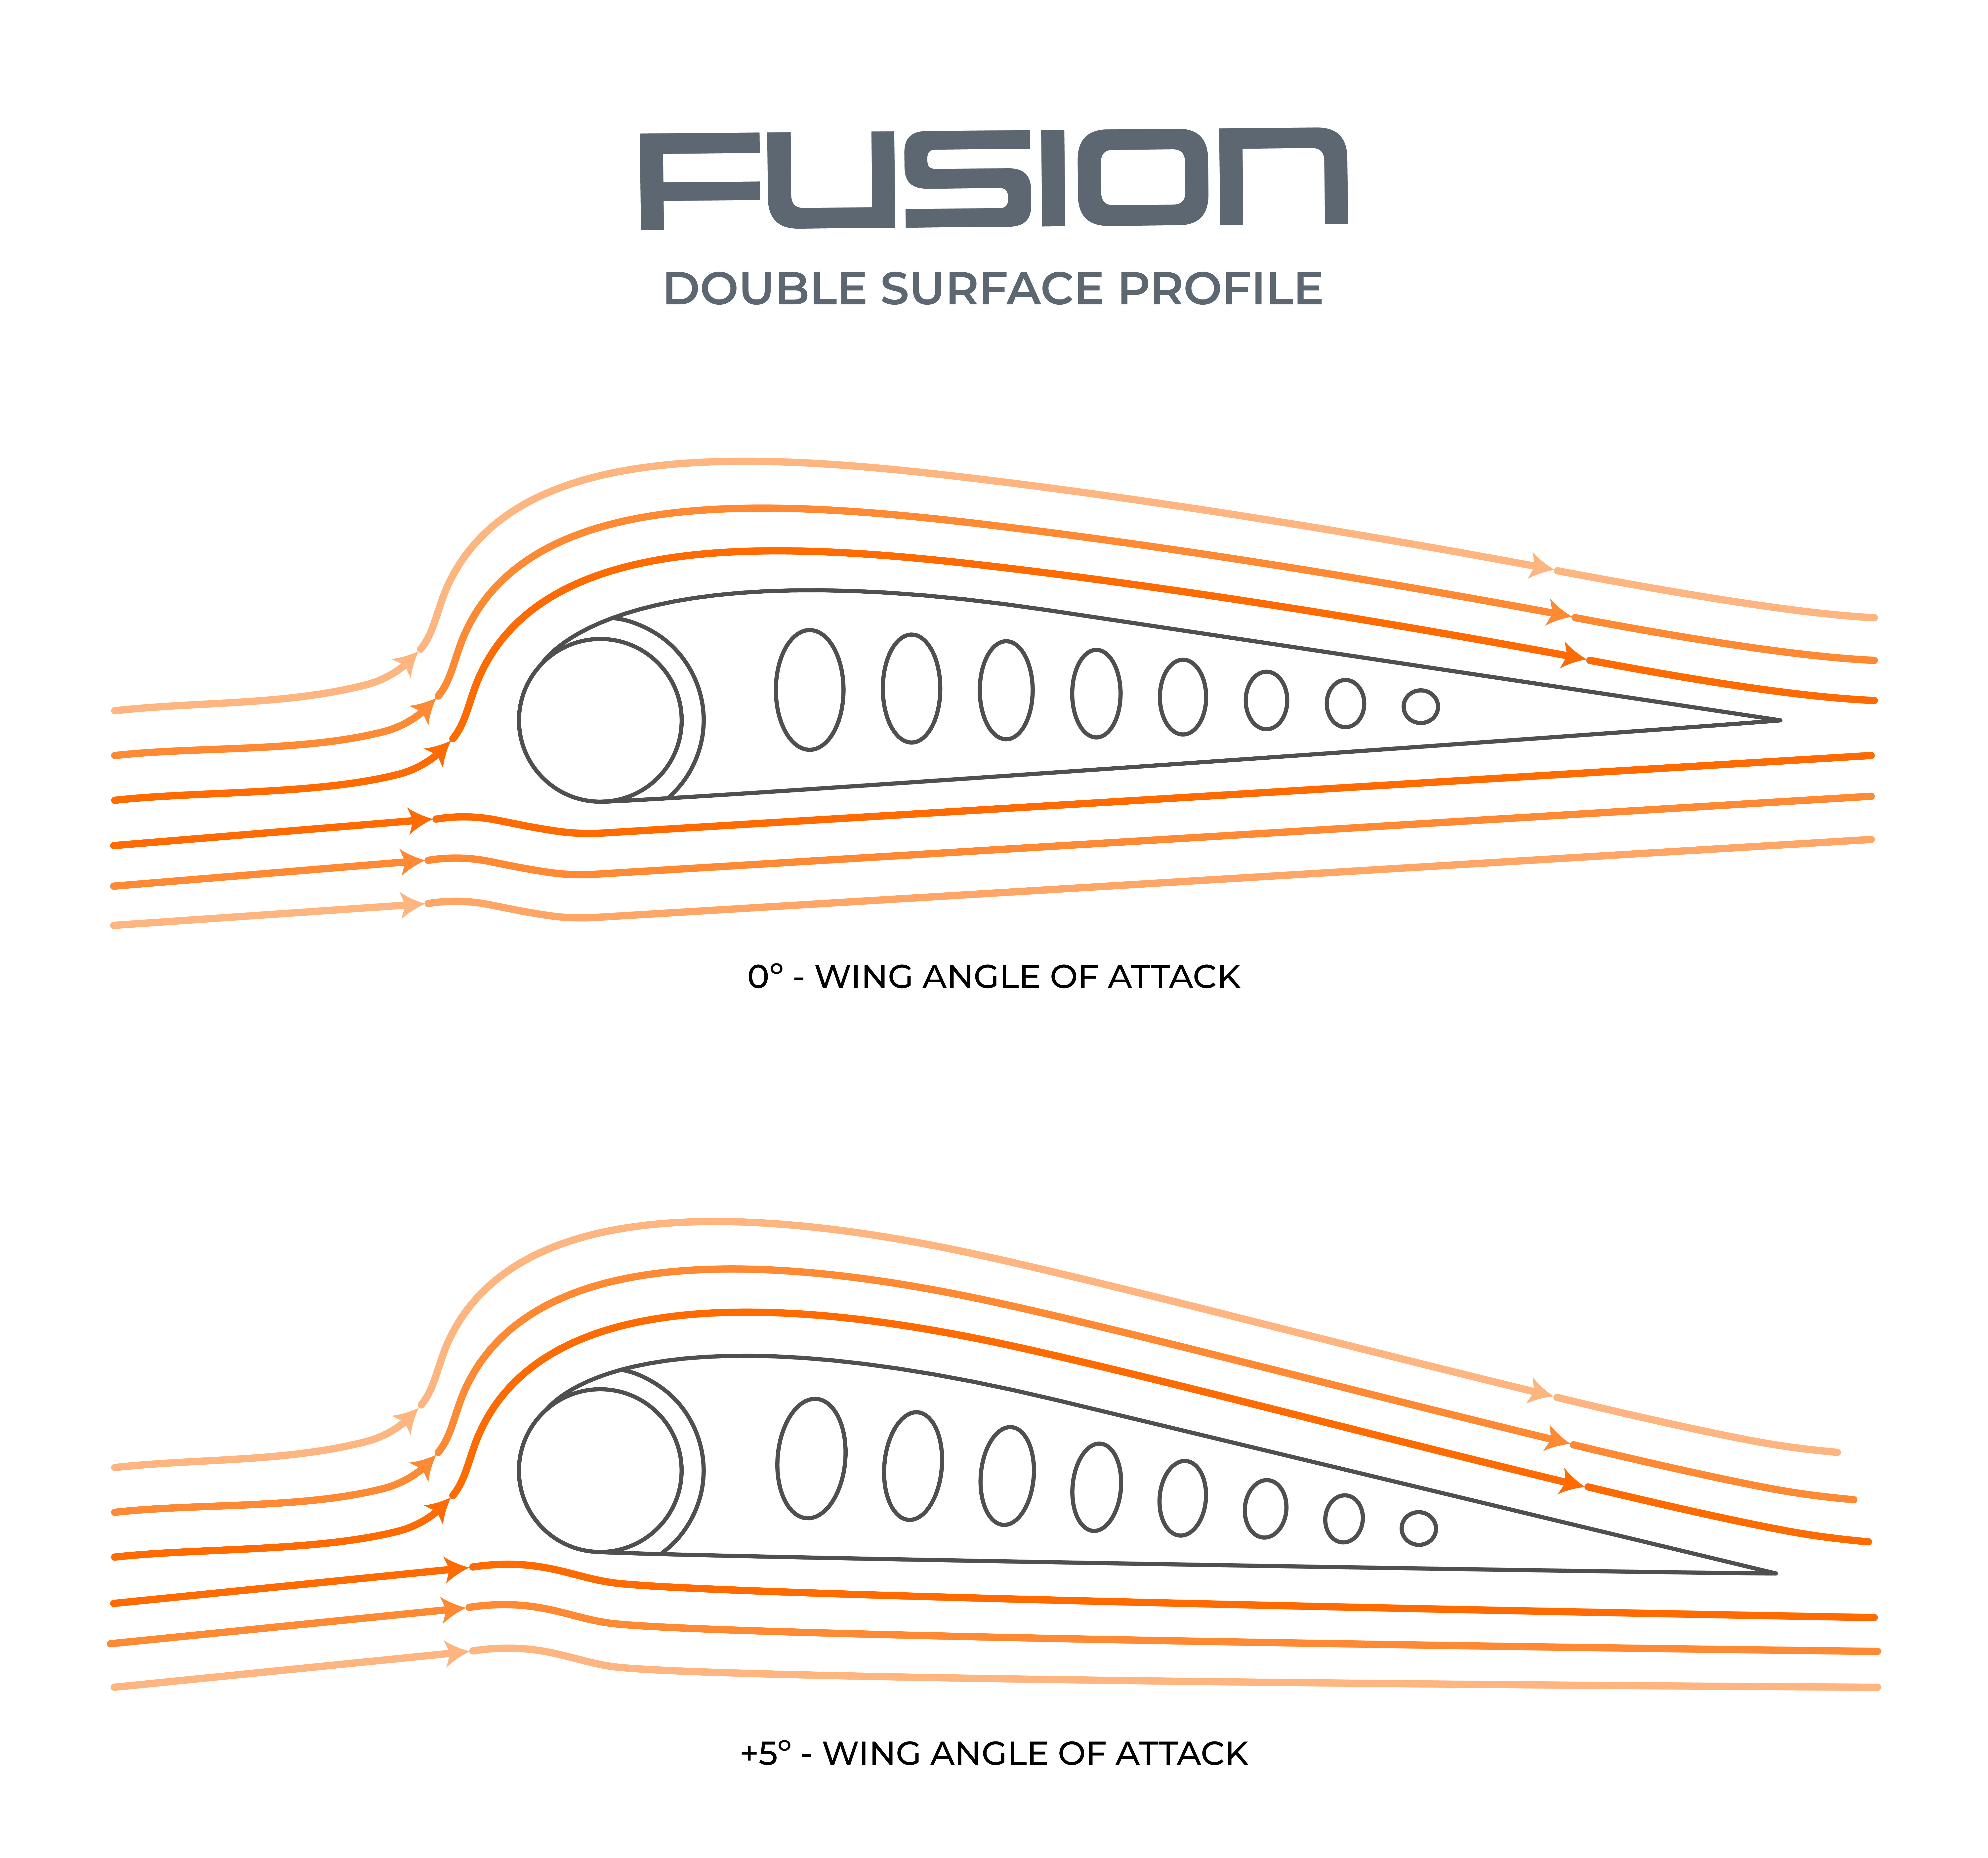 Advantage of Fusion double surface design